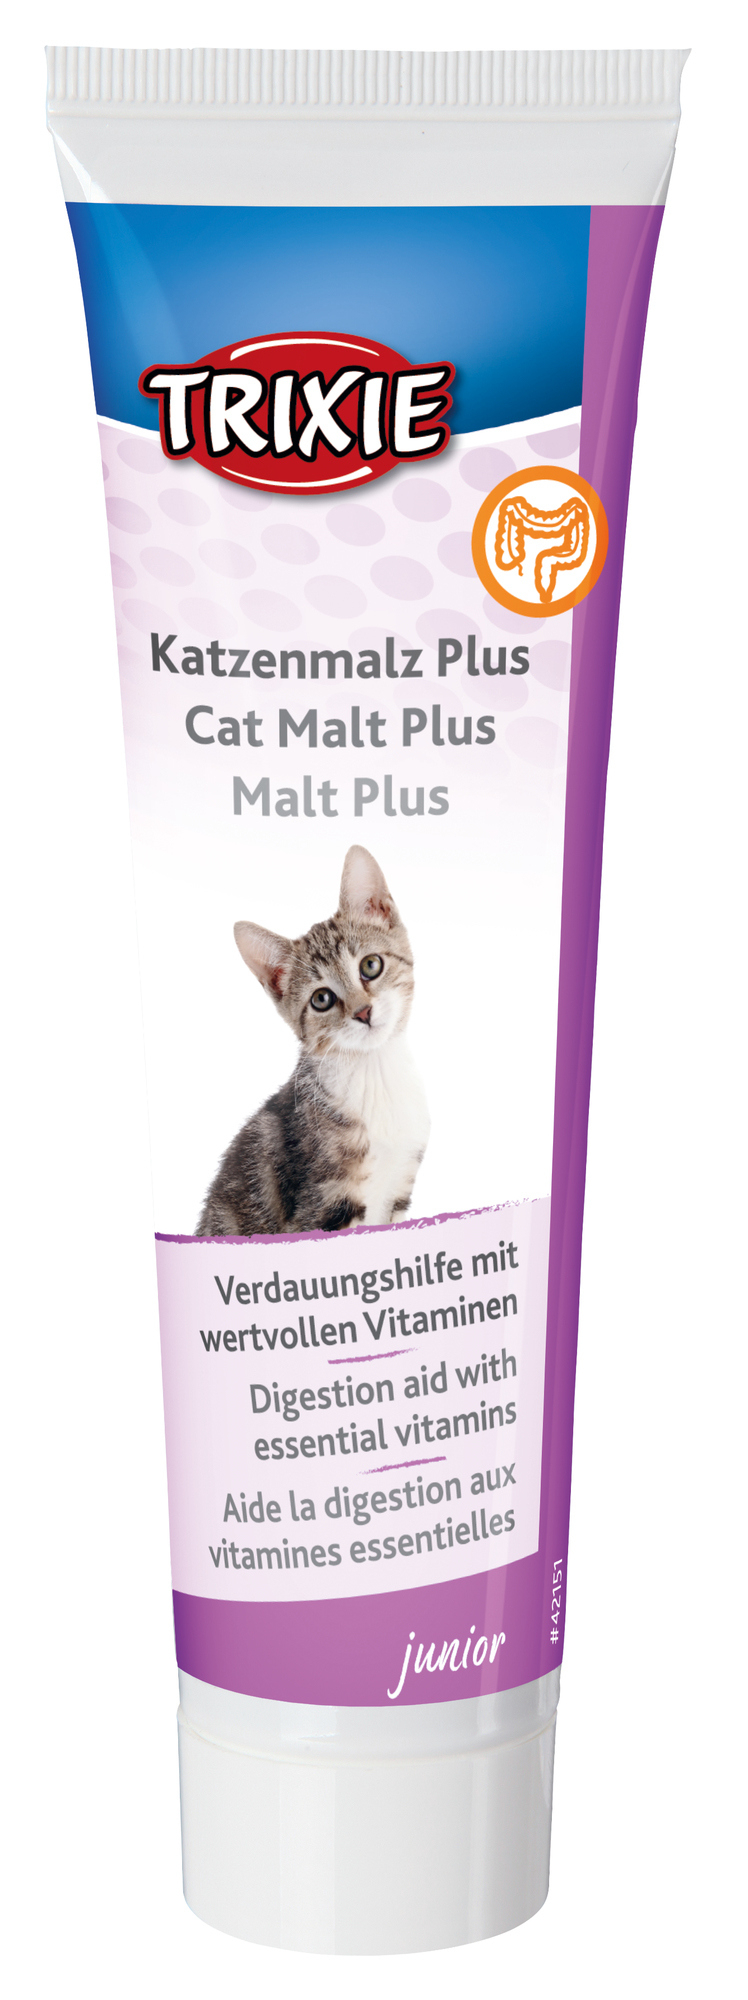 Malt Plus para gatitos